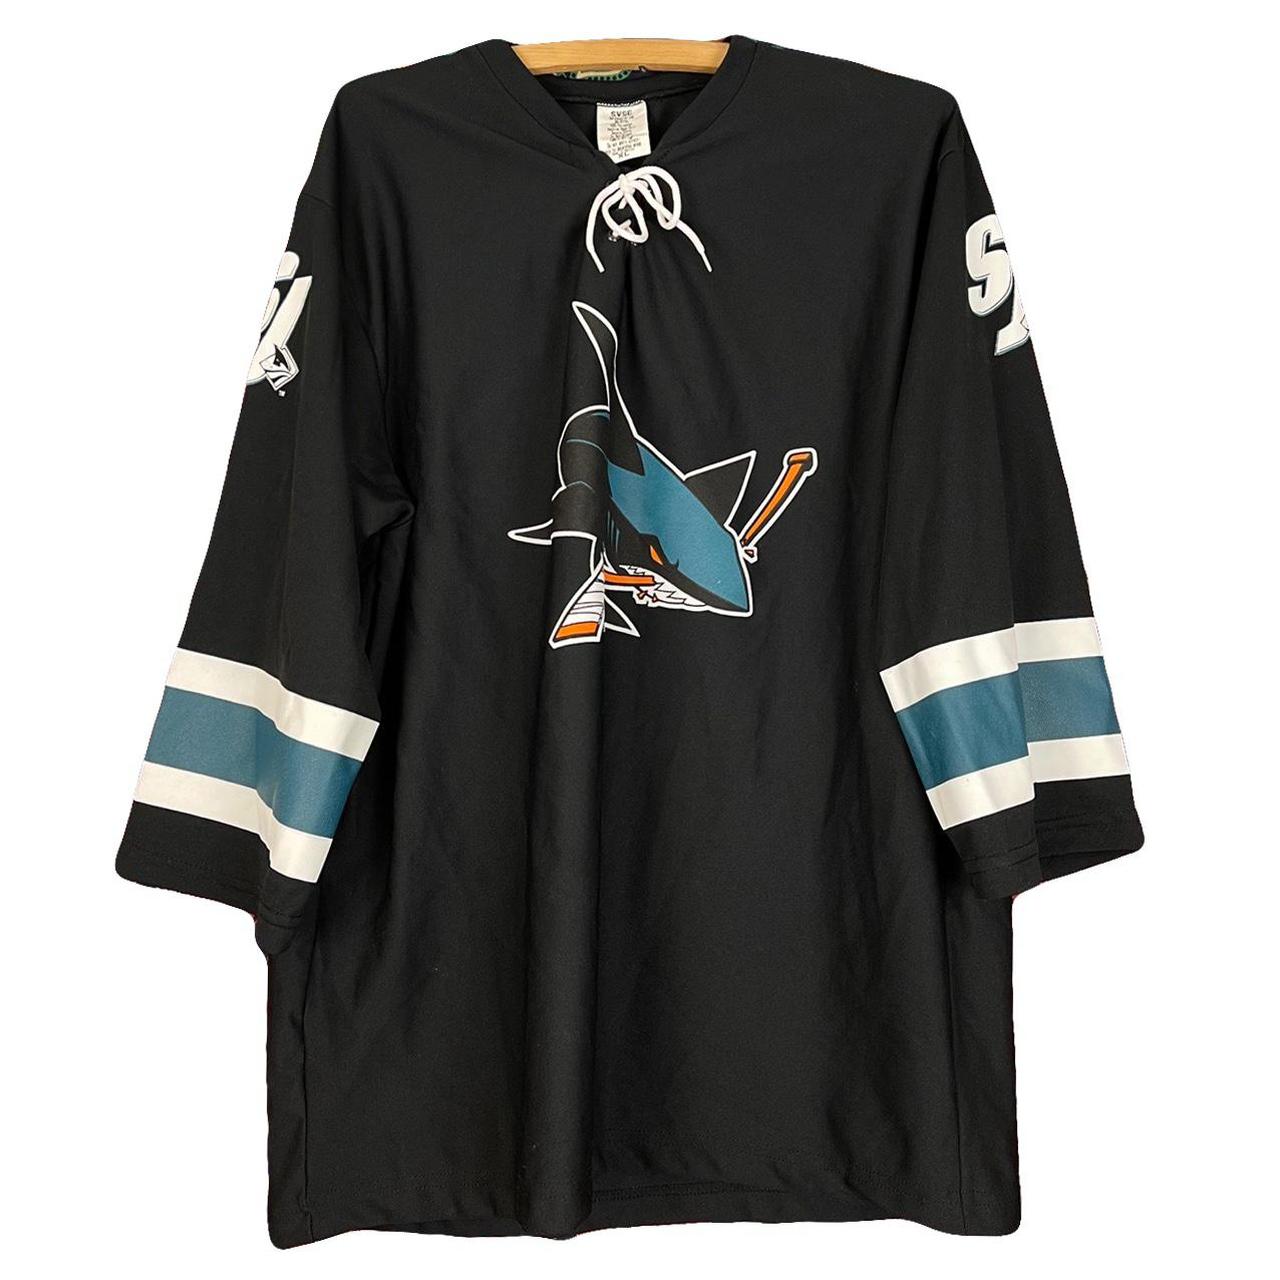 Product Image 1 - San Jose Sharks Hockey Jersey

🌊Free